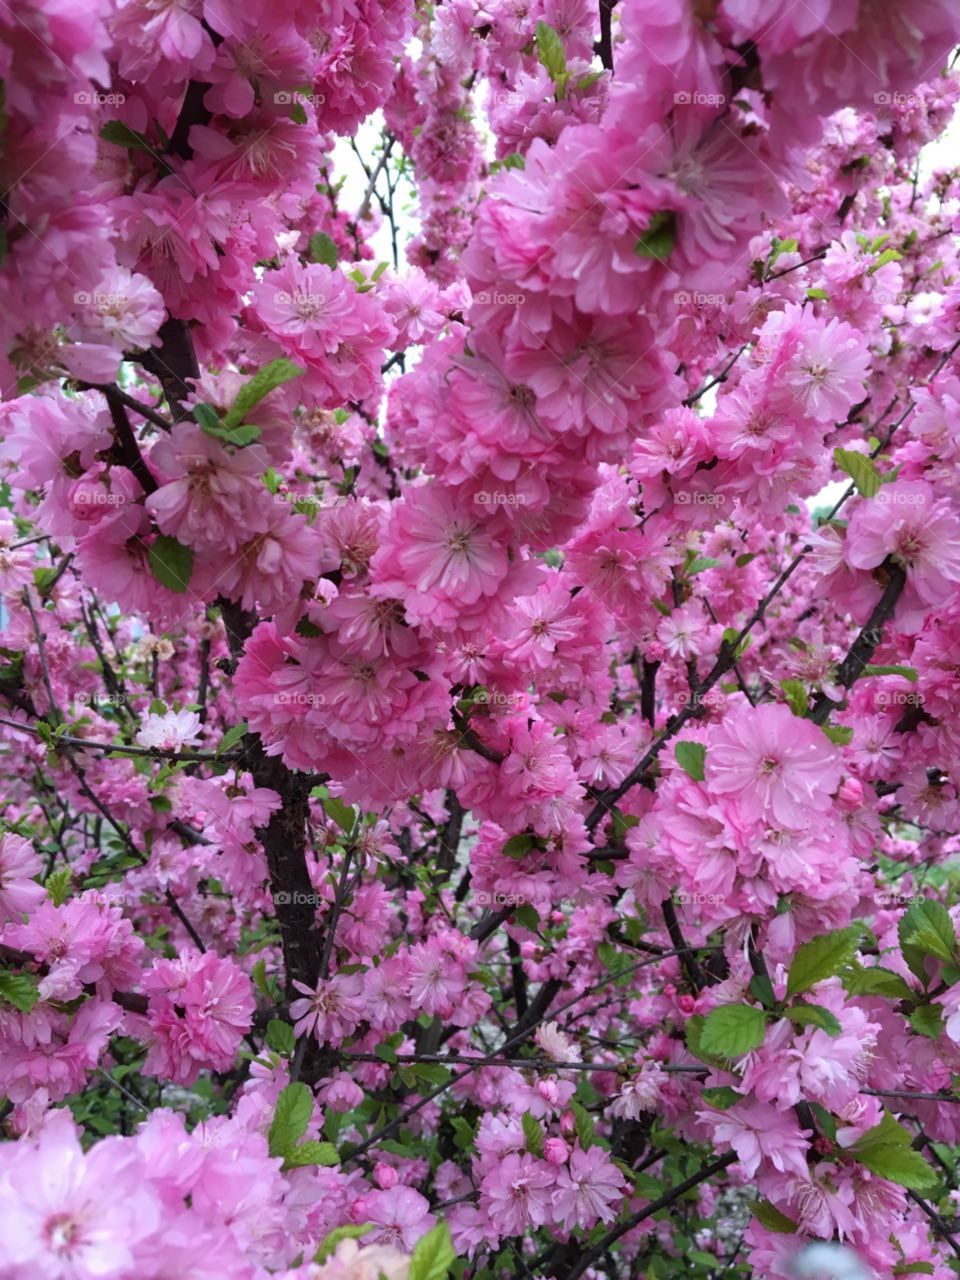 #Sakura # nature # beautiful tree # photo without processing # iPhone 6s